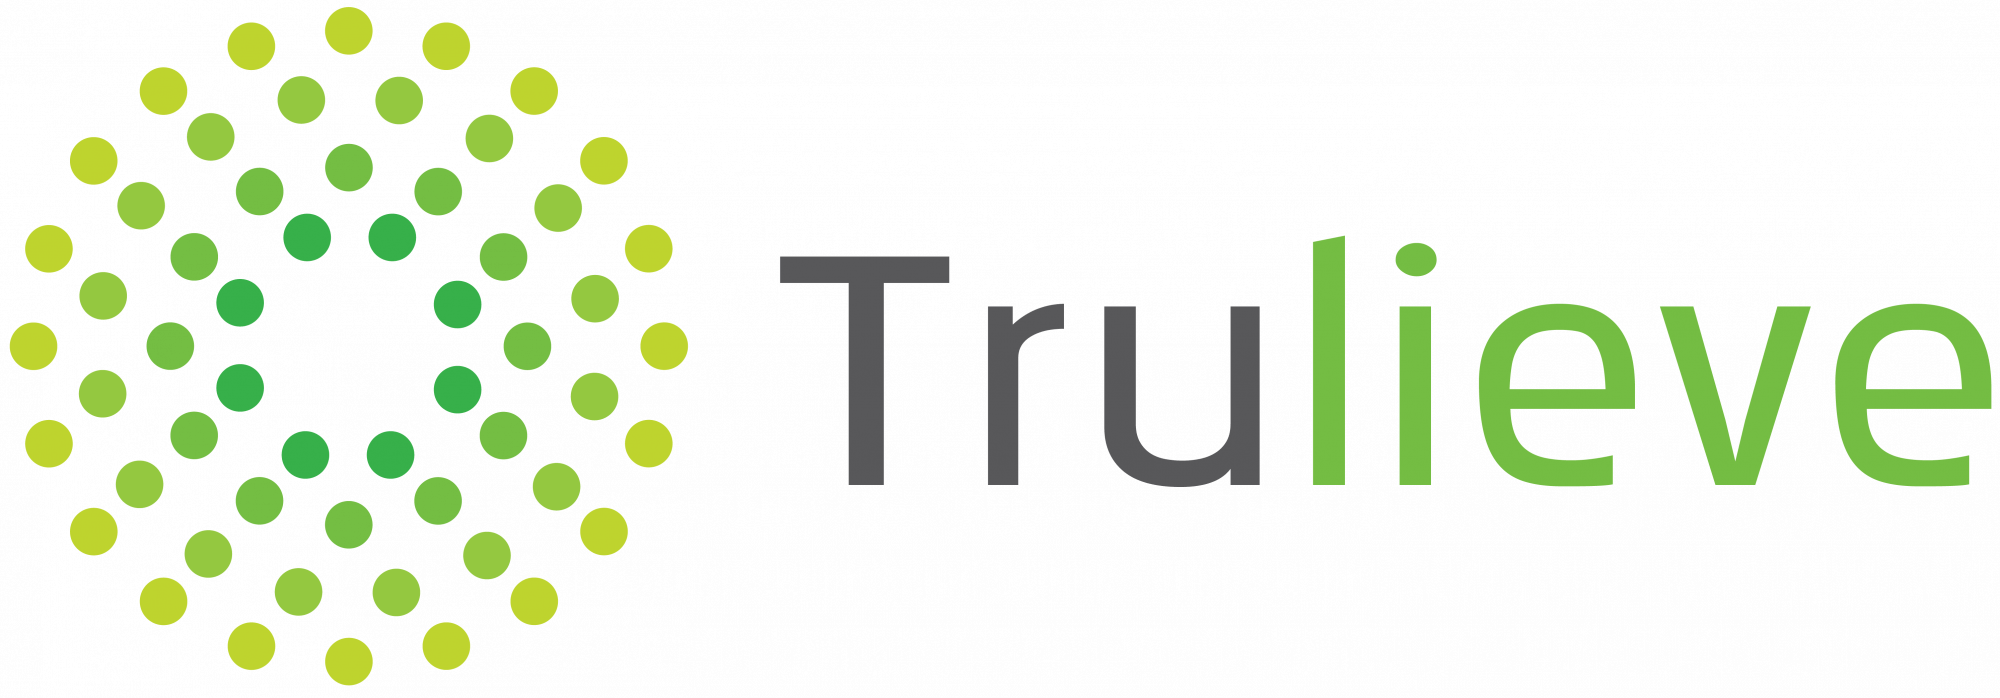 Trulieve_logo-01_1